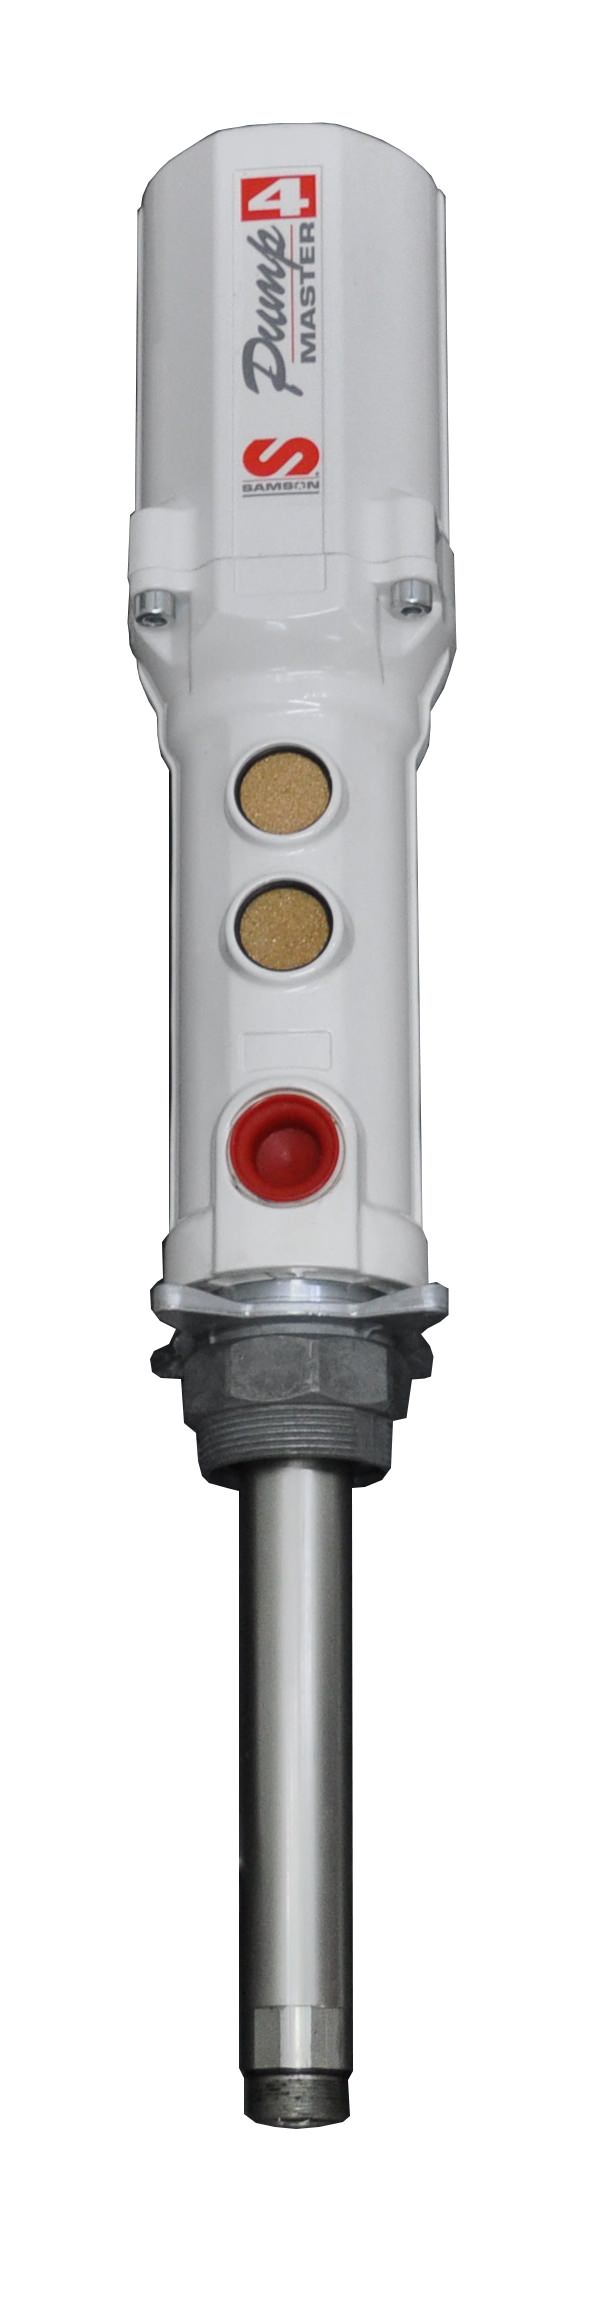 PumpMaster 4 3:1 Air Operated Oil Pump